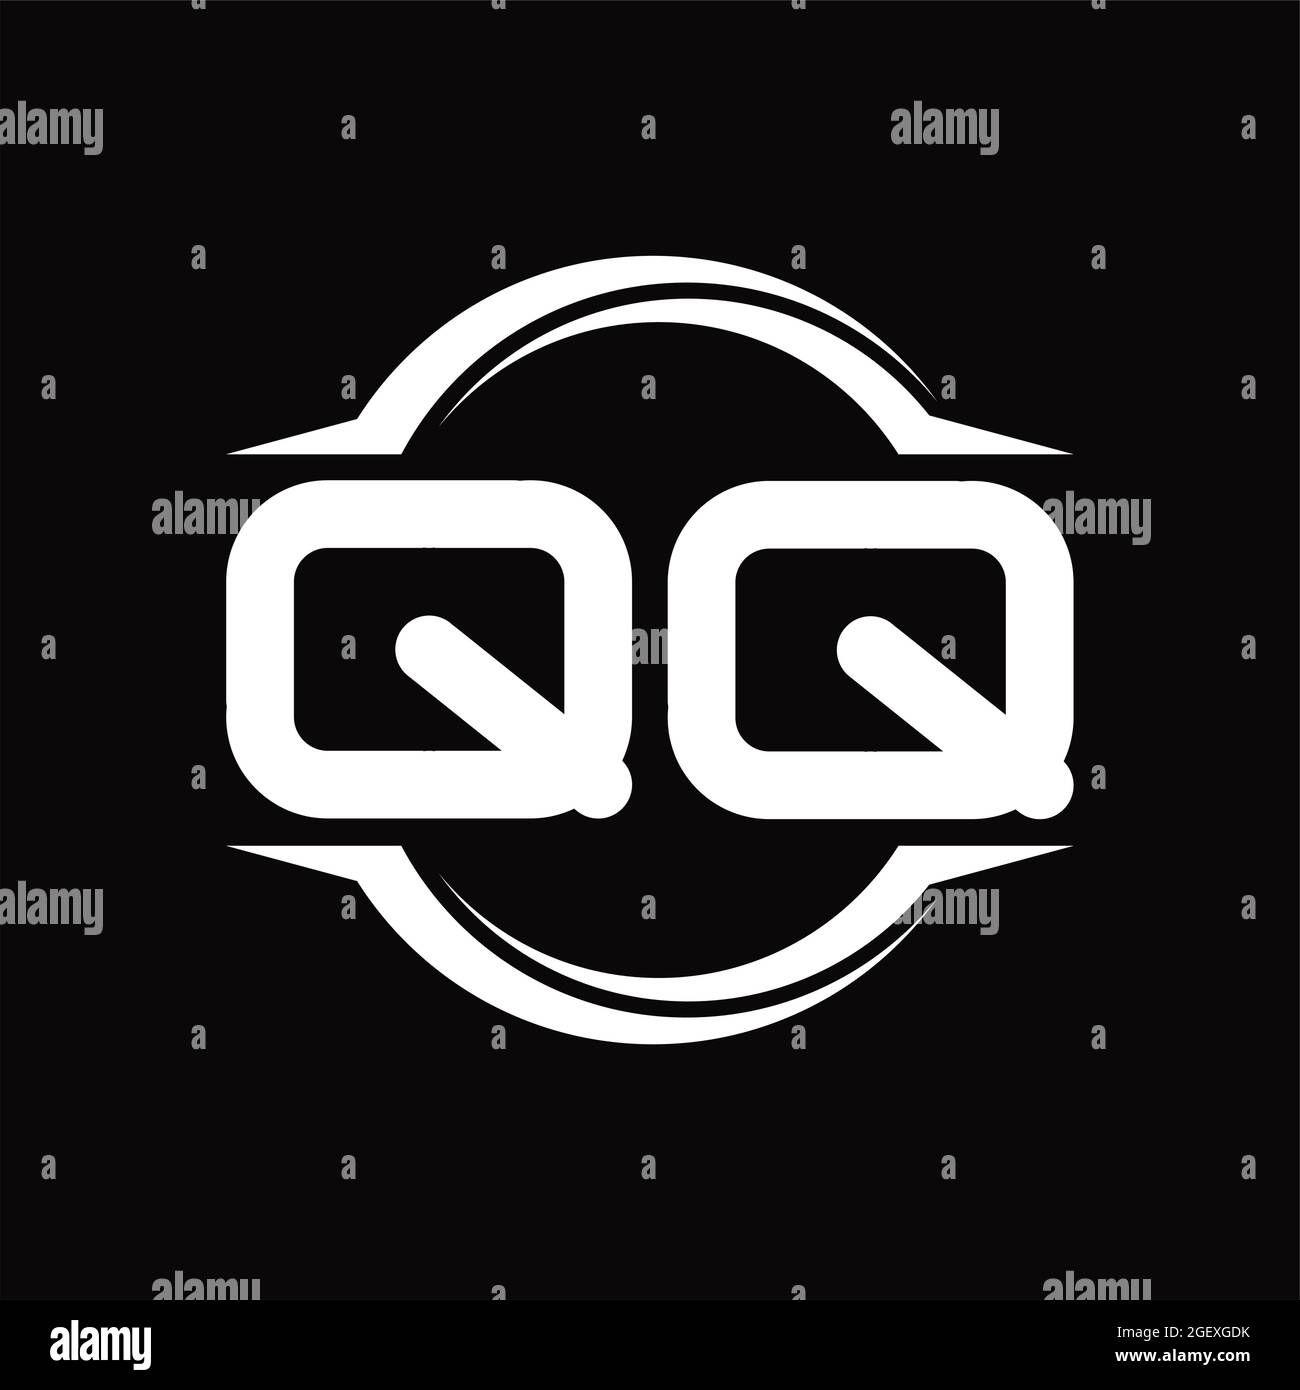 QQ星logo图片素材-编号39890769-图行天下